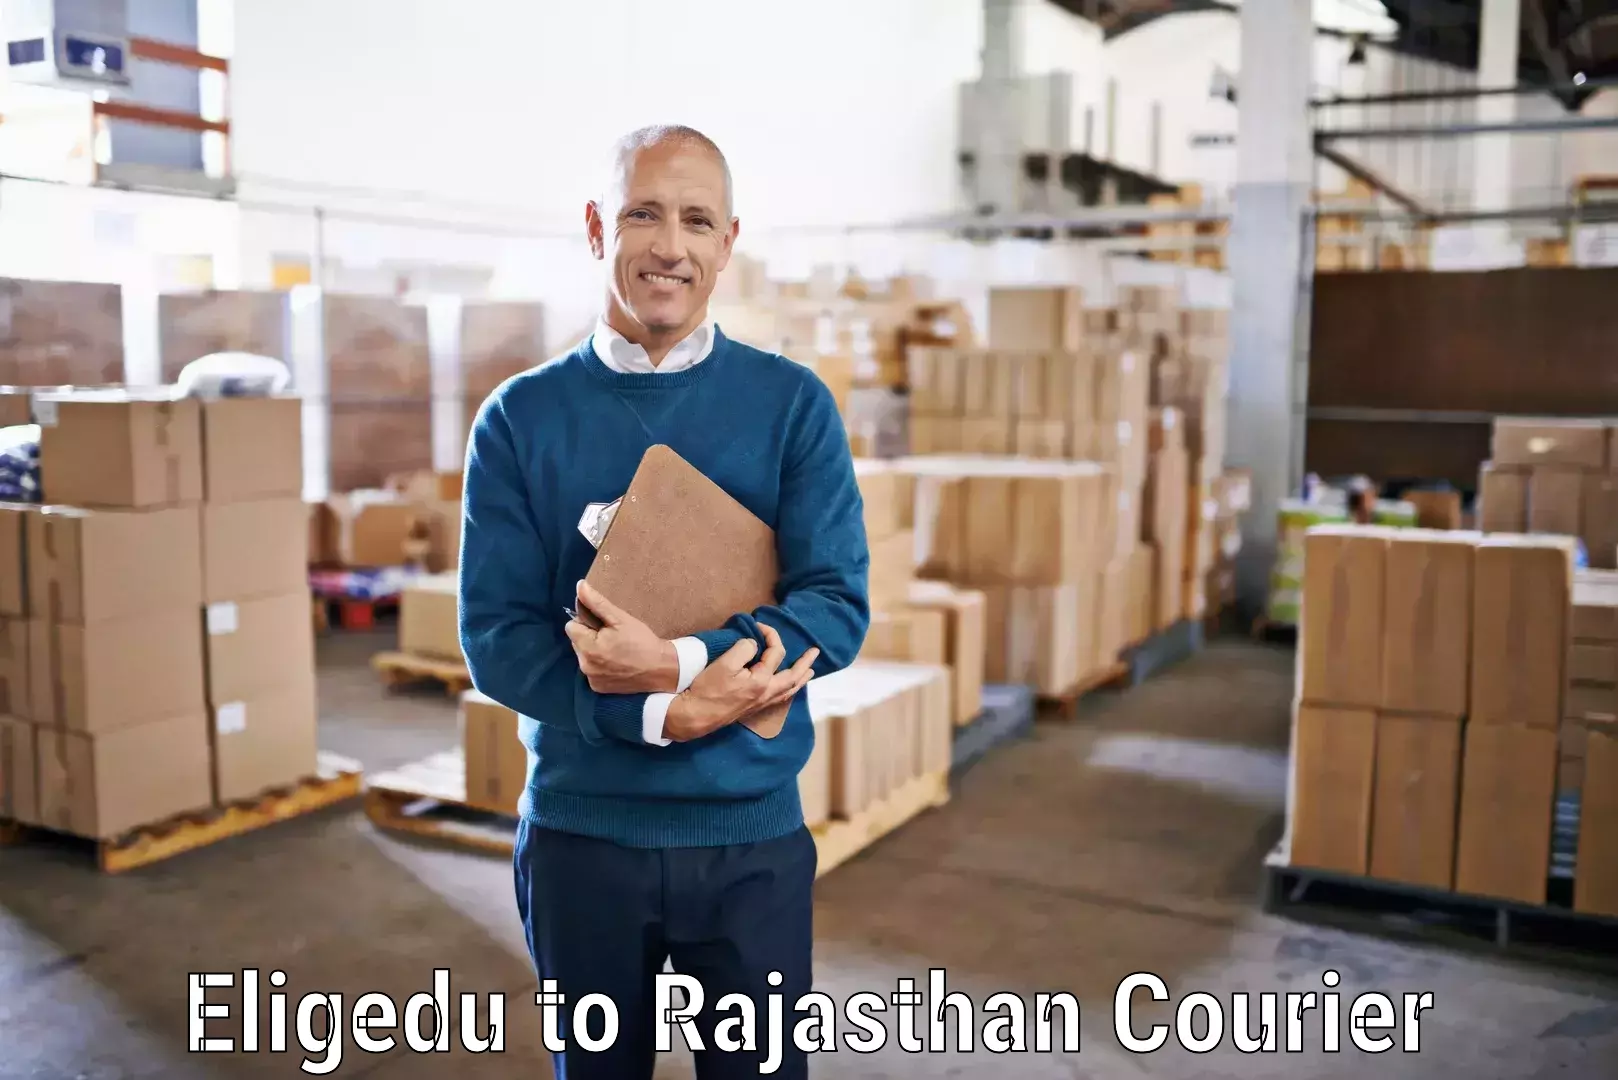 24/7 courier service Eligedu to Kishangarh